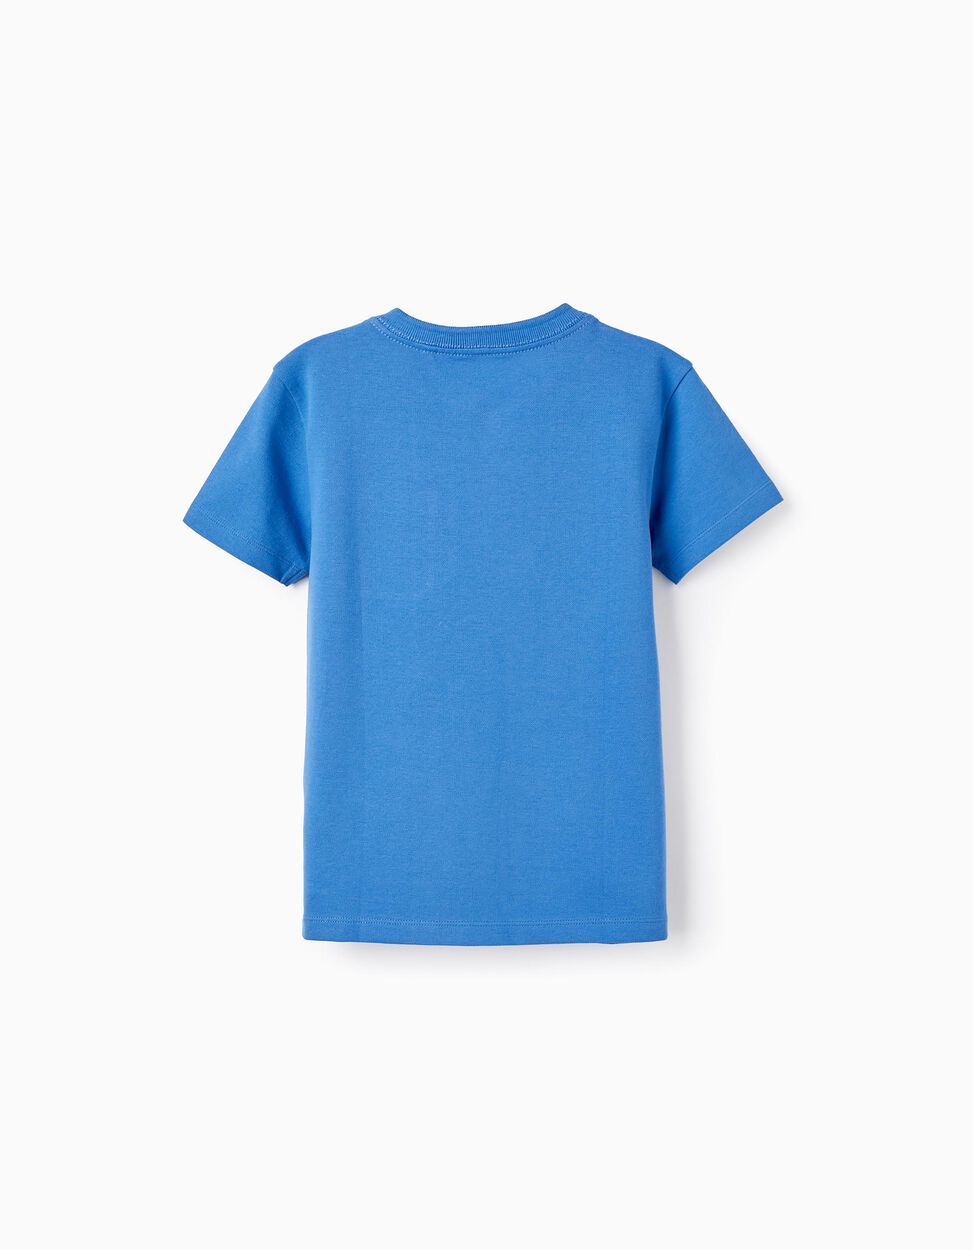 Buy Online Short-Sleeved T-Shirt in Cotton Piqué for Boys, Blue